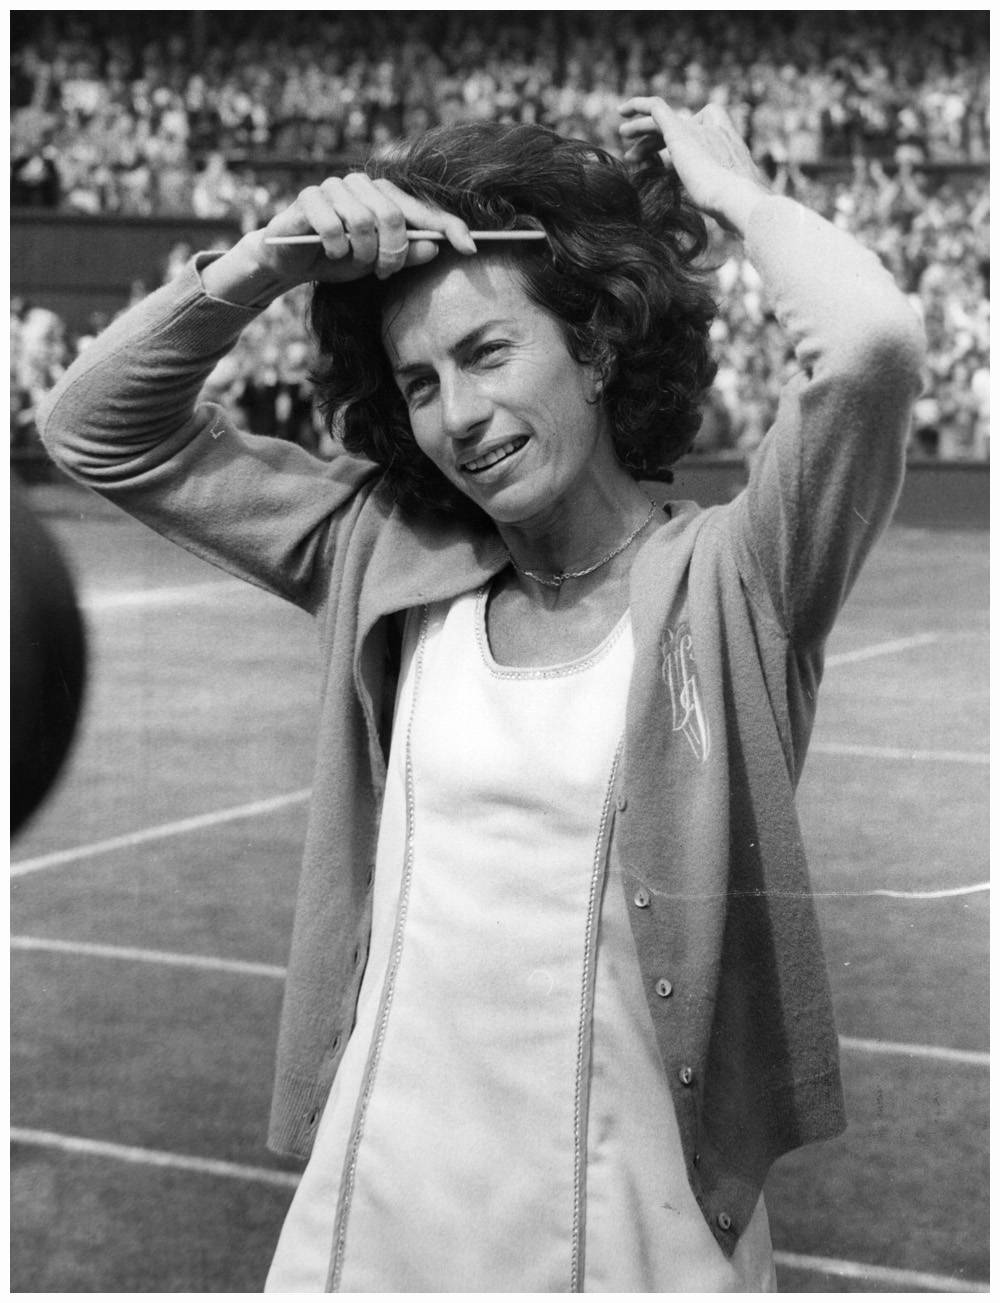 Legendary tennis star, Virginia Wade, in action. Wallpaper